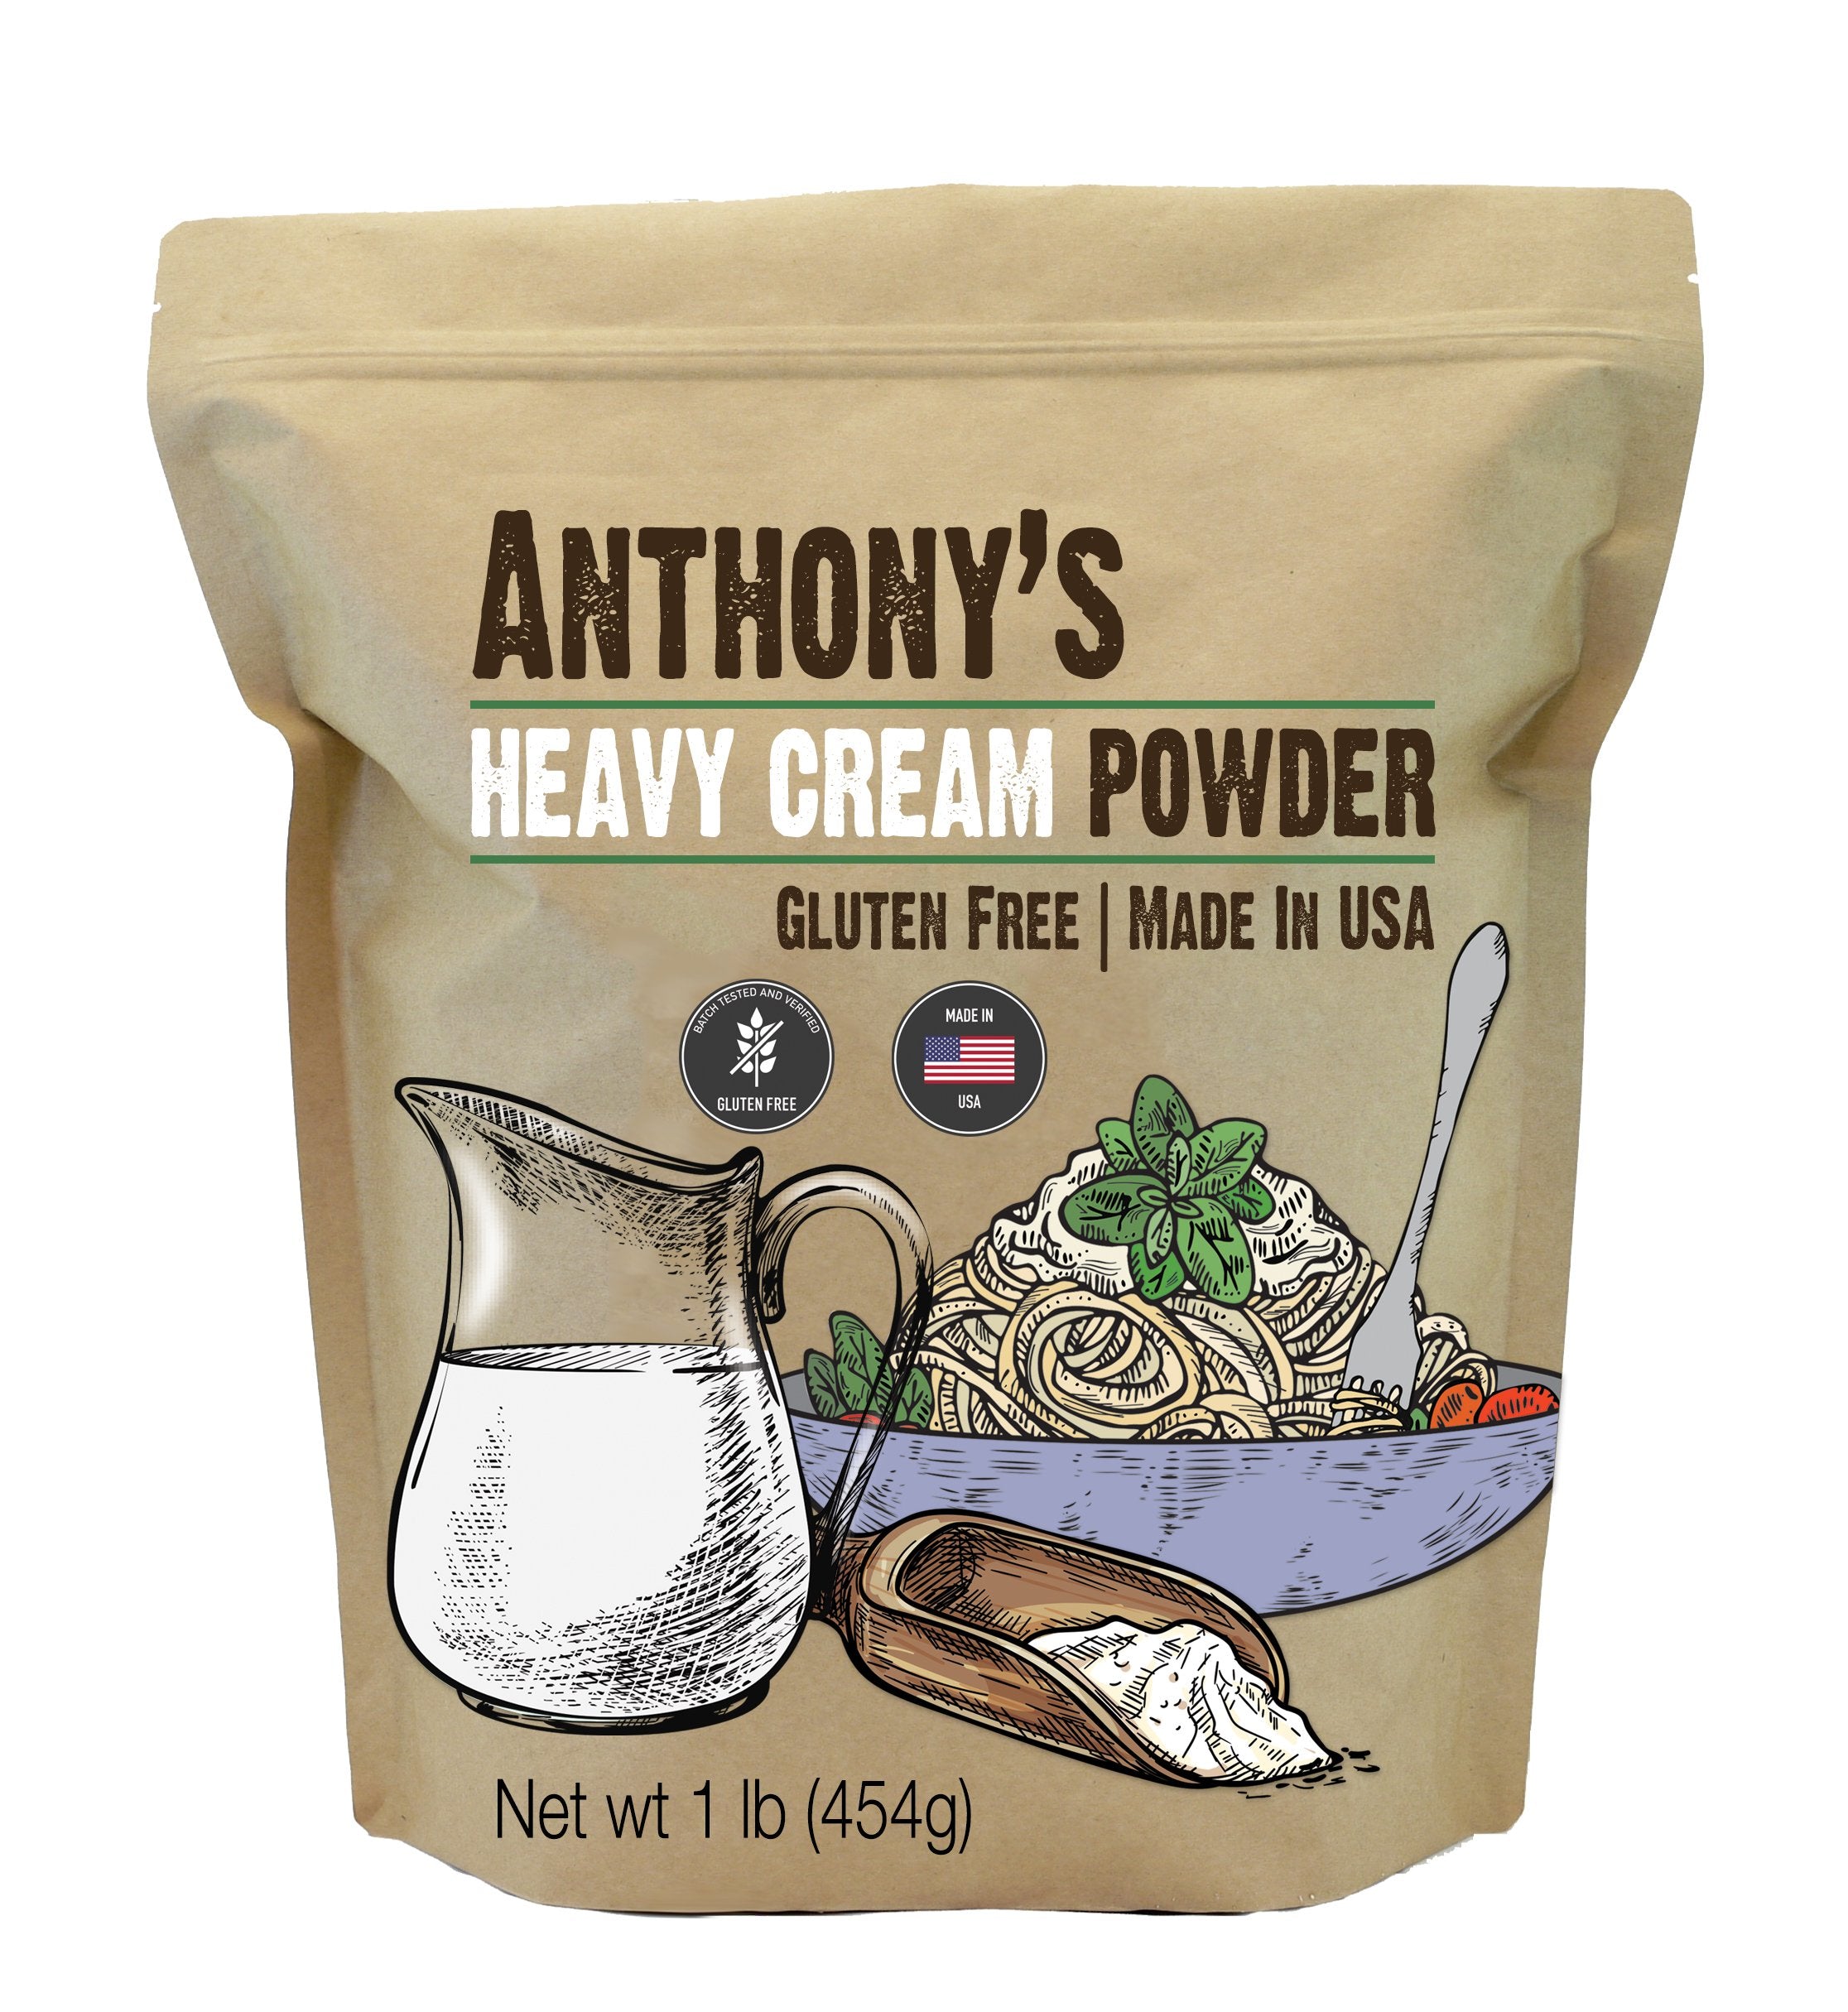 Amazing Grass Green Superfood Powder, Original (45 servings, 12.6 oz.) -  Sam's Club